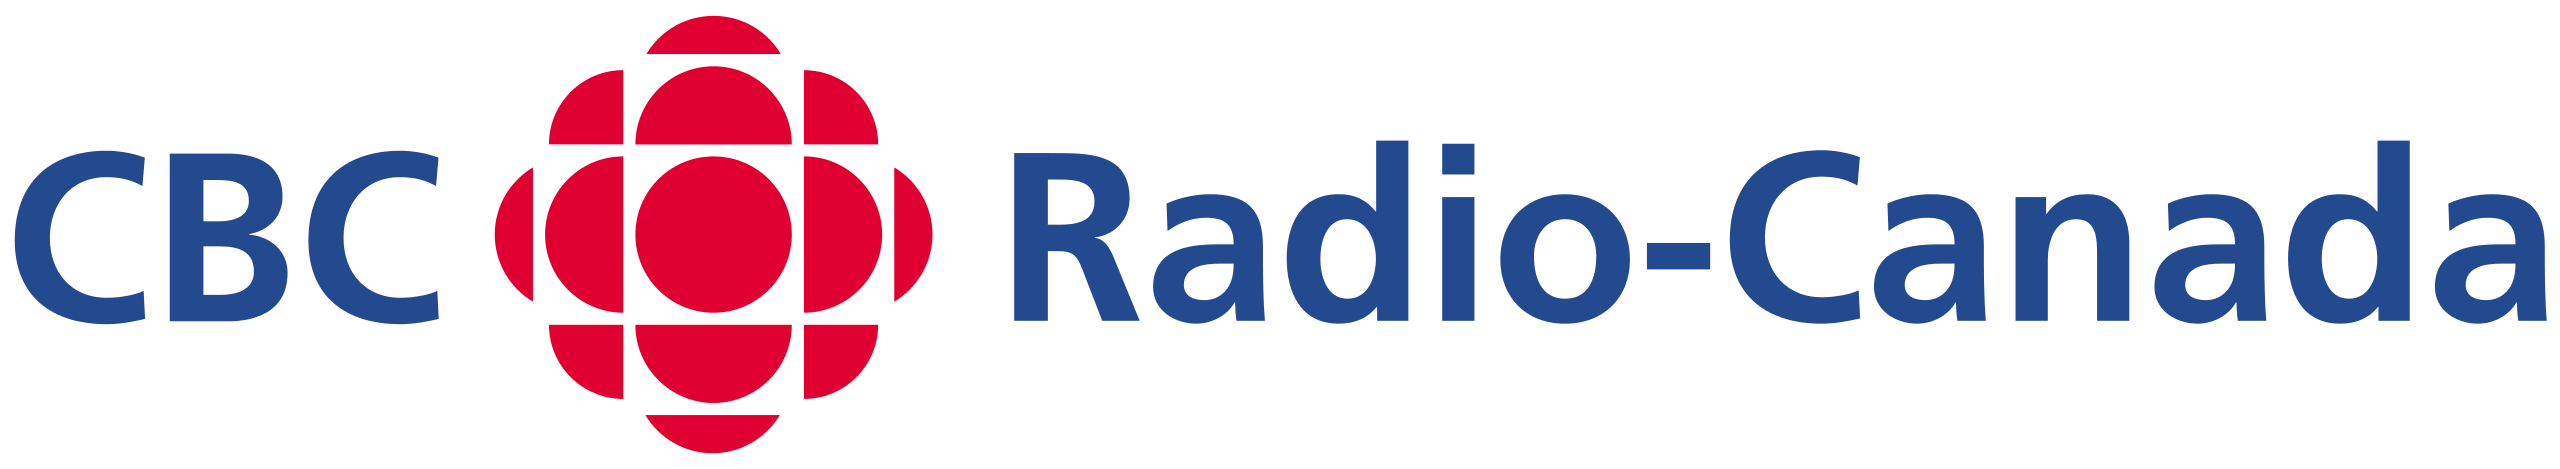 cbcradio-canada_(logo).png